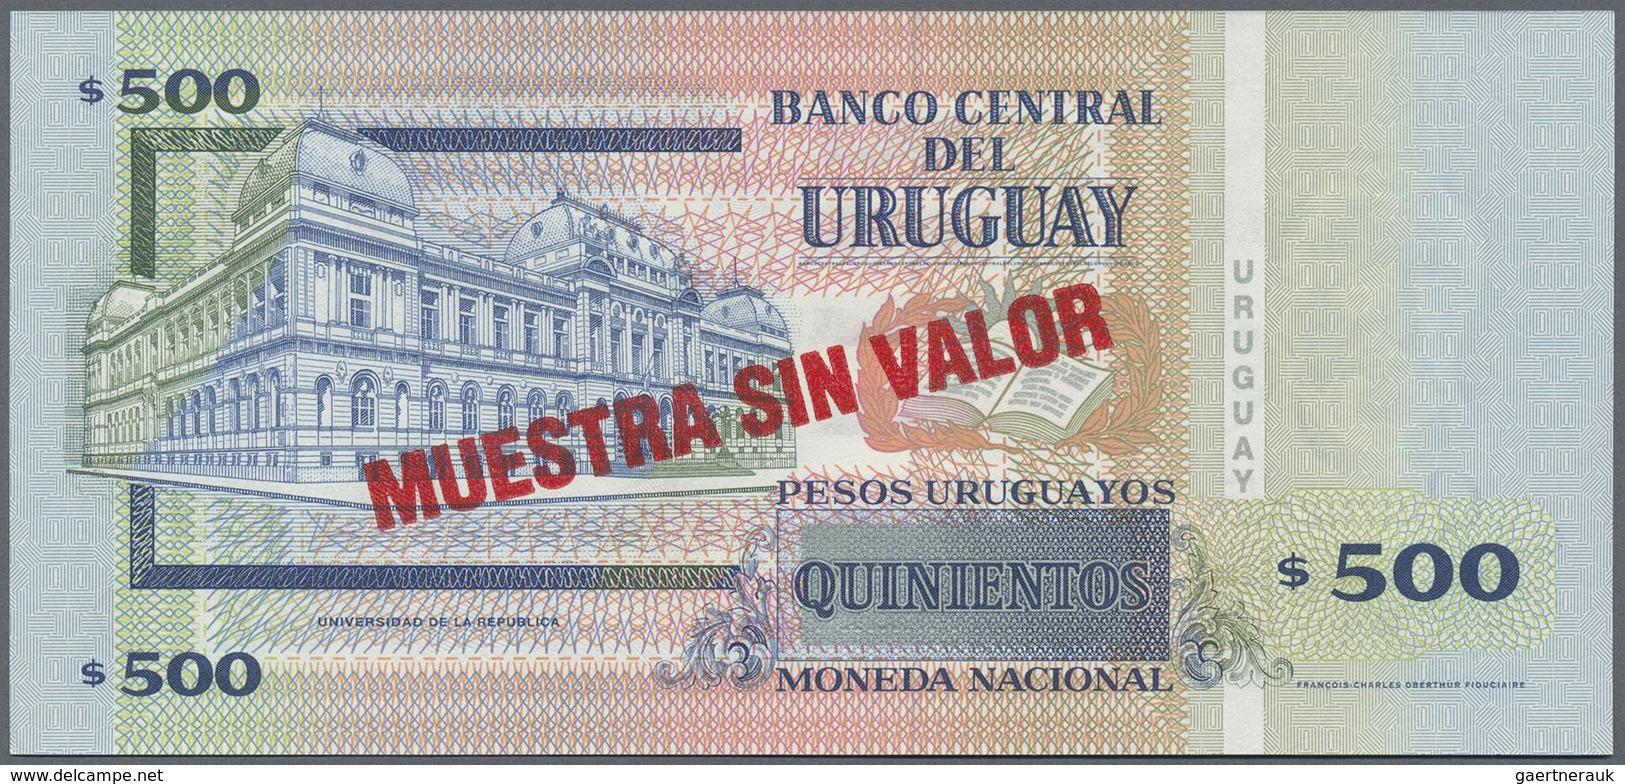 Uruguay: Set Of 2 Notes Containing 200 And 500 Pesos 2006 Specimen P. 89s, 90s In Condition: UNC. (2 - Uruguay